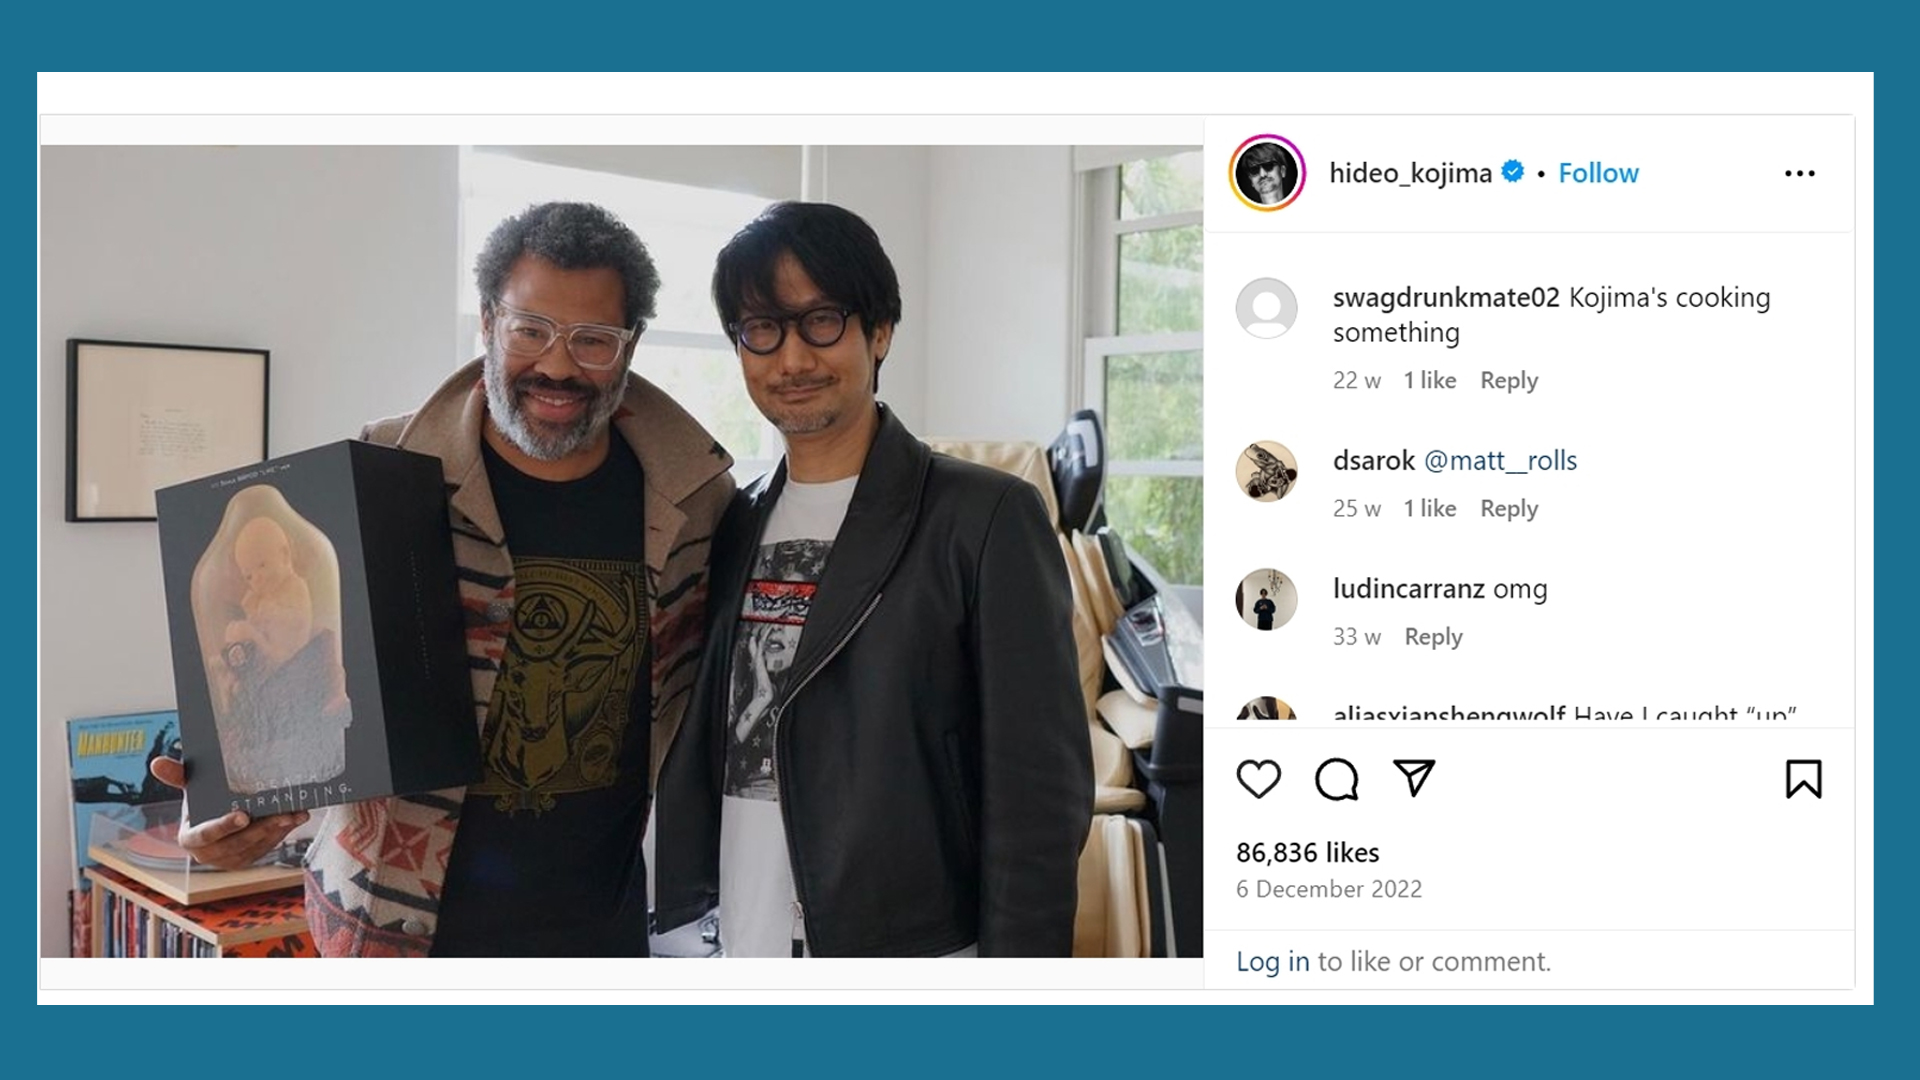 Hideo Kojima Is Making A New Game Called OD With Jordan Peele